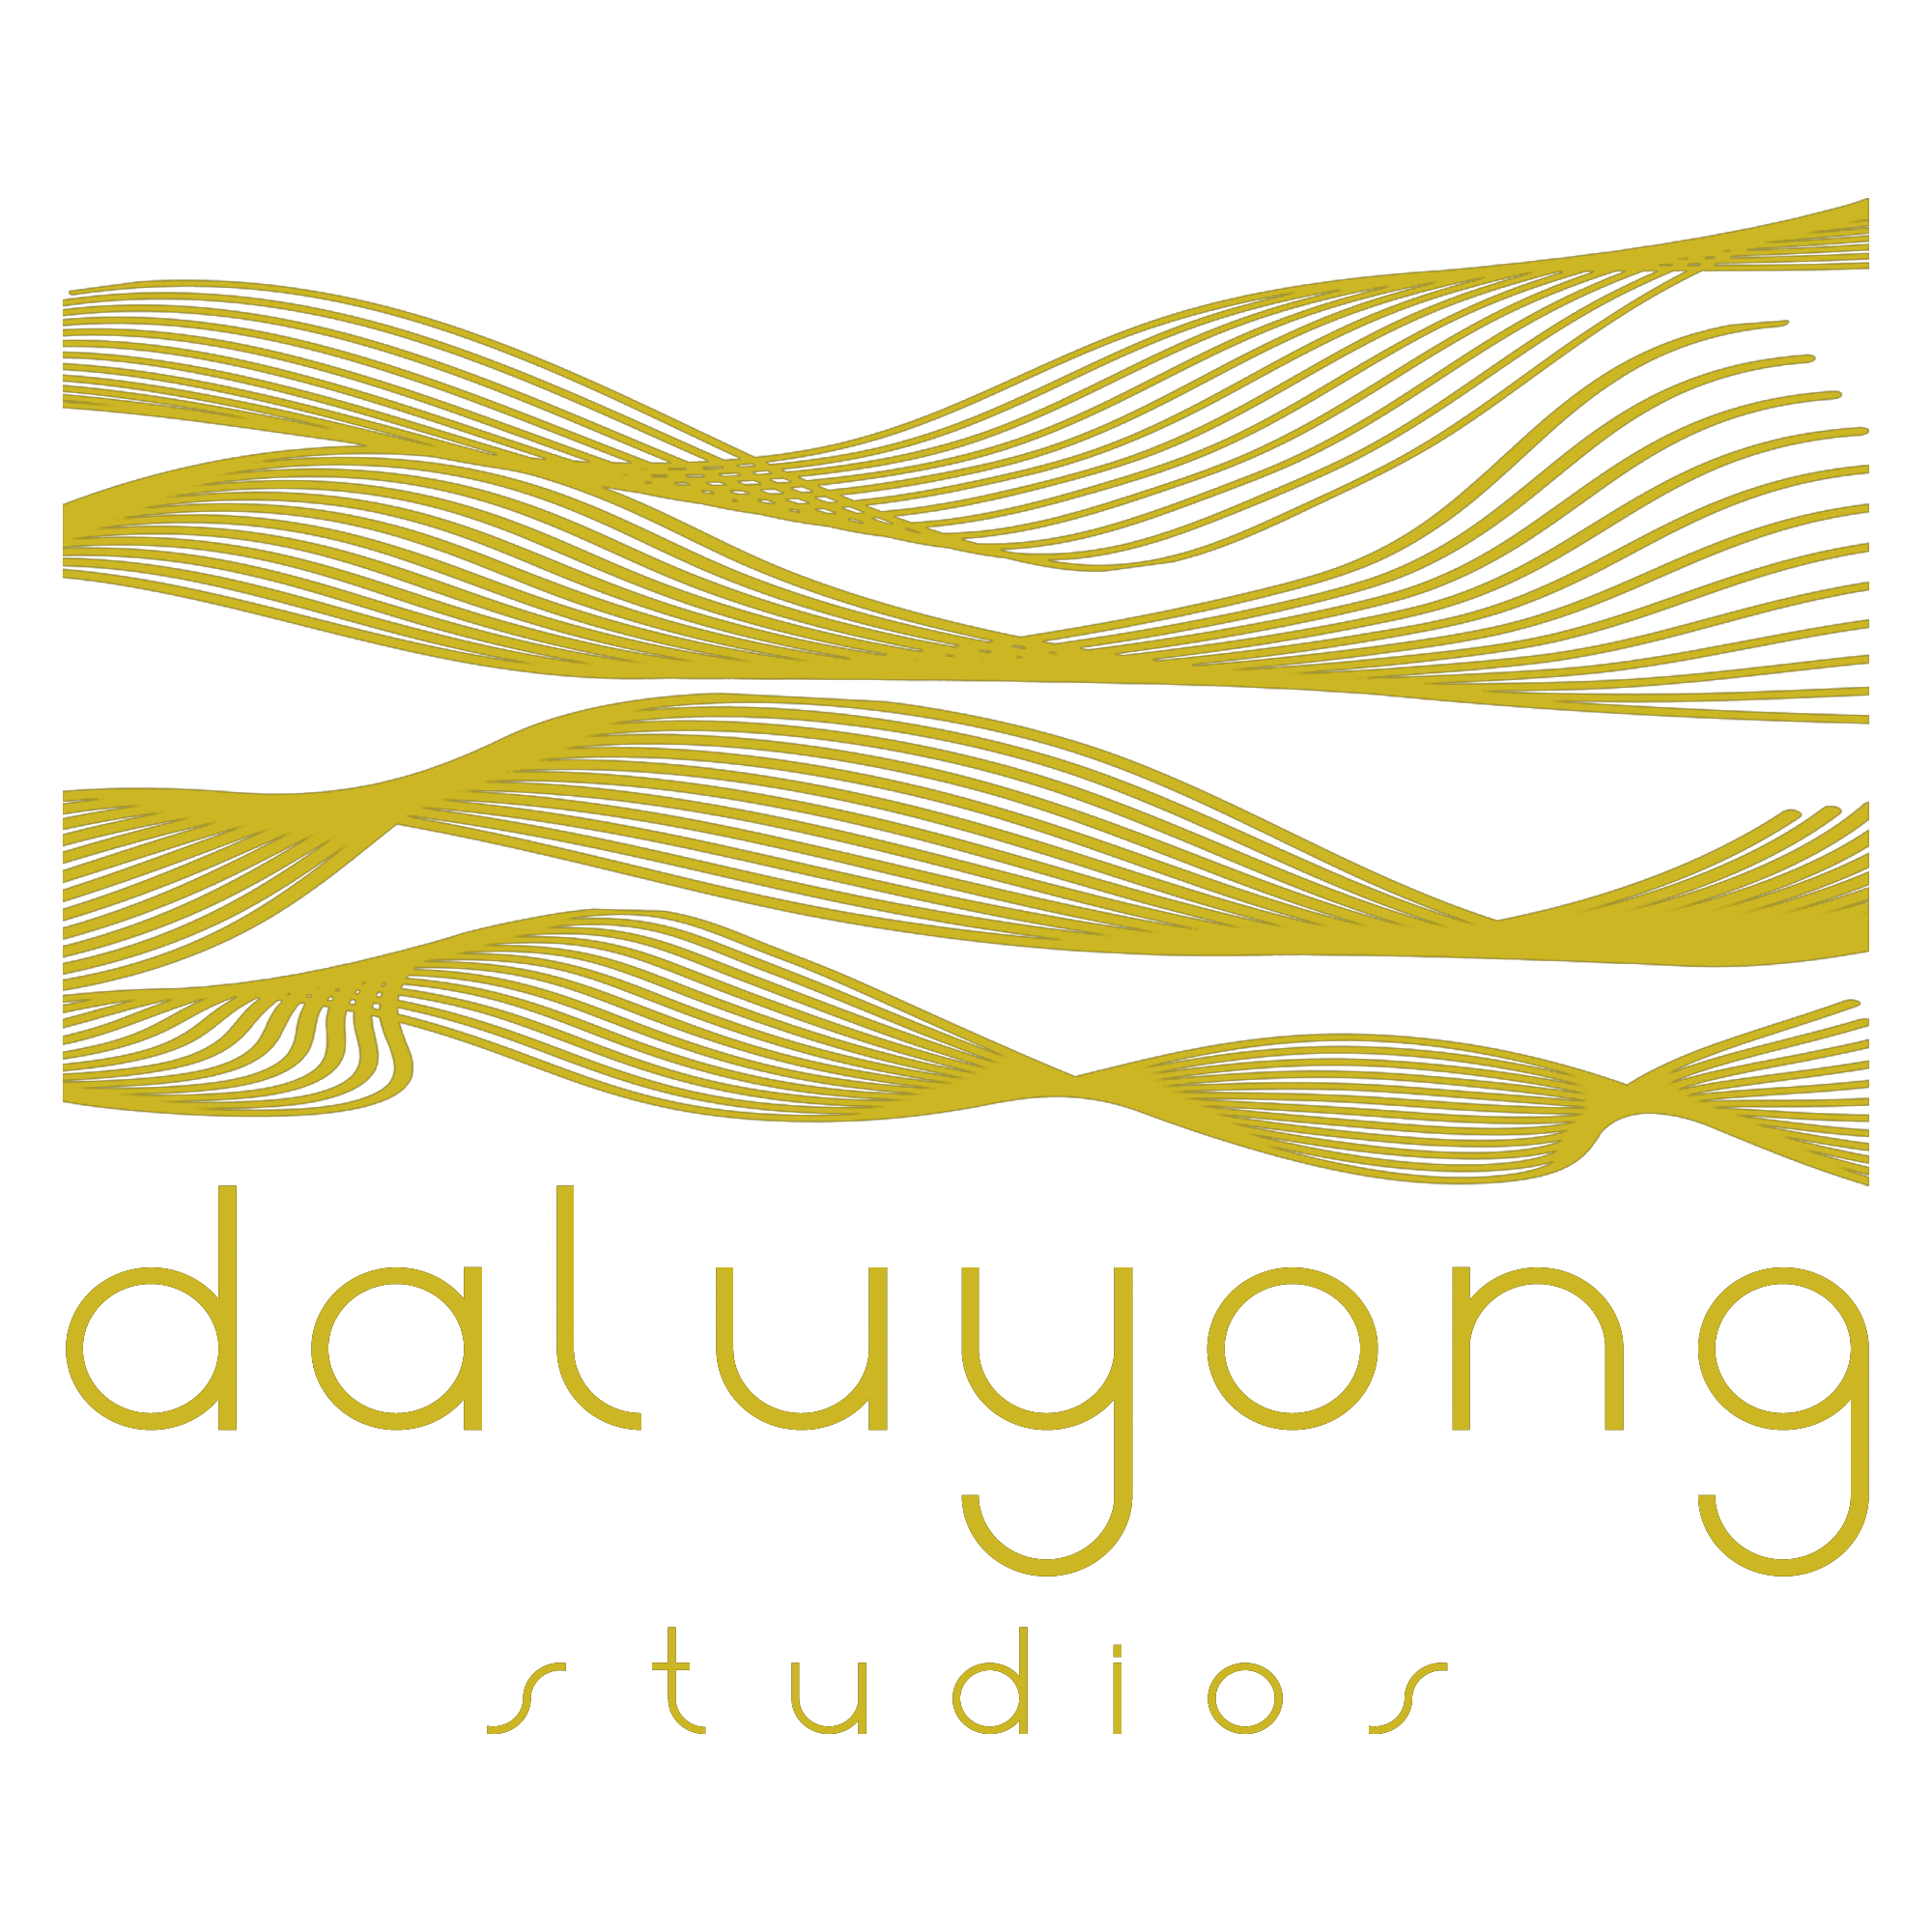 Daluyong Studios